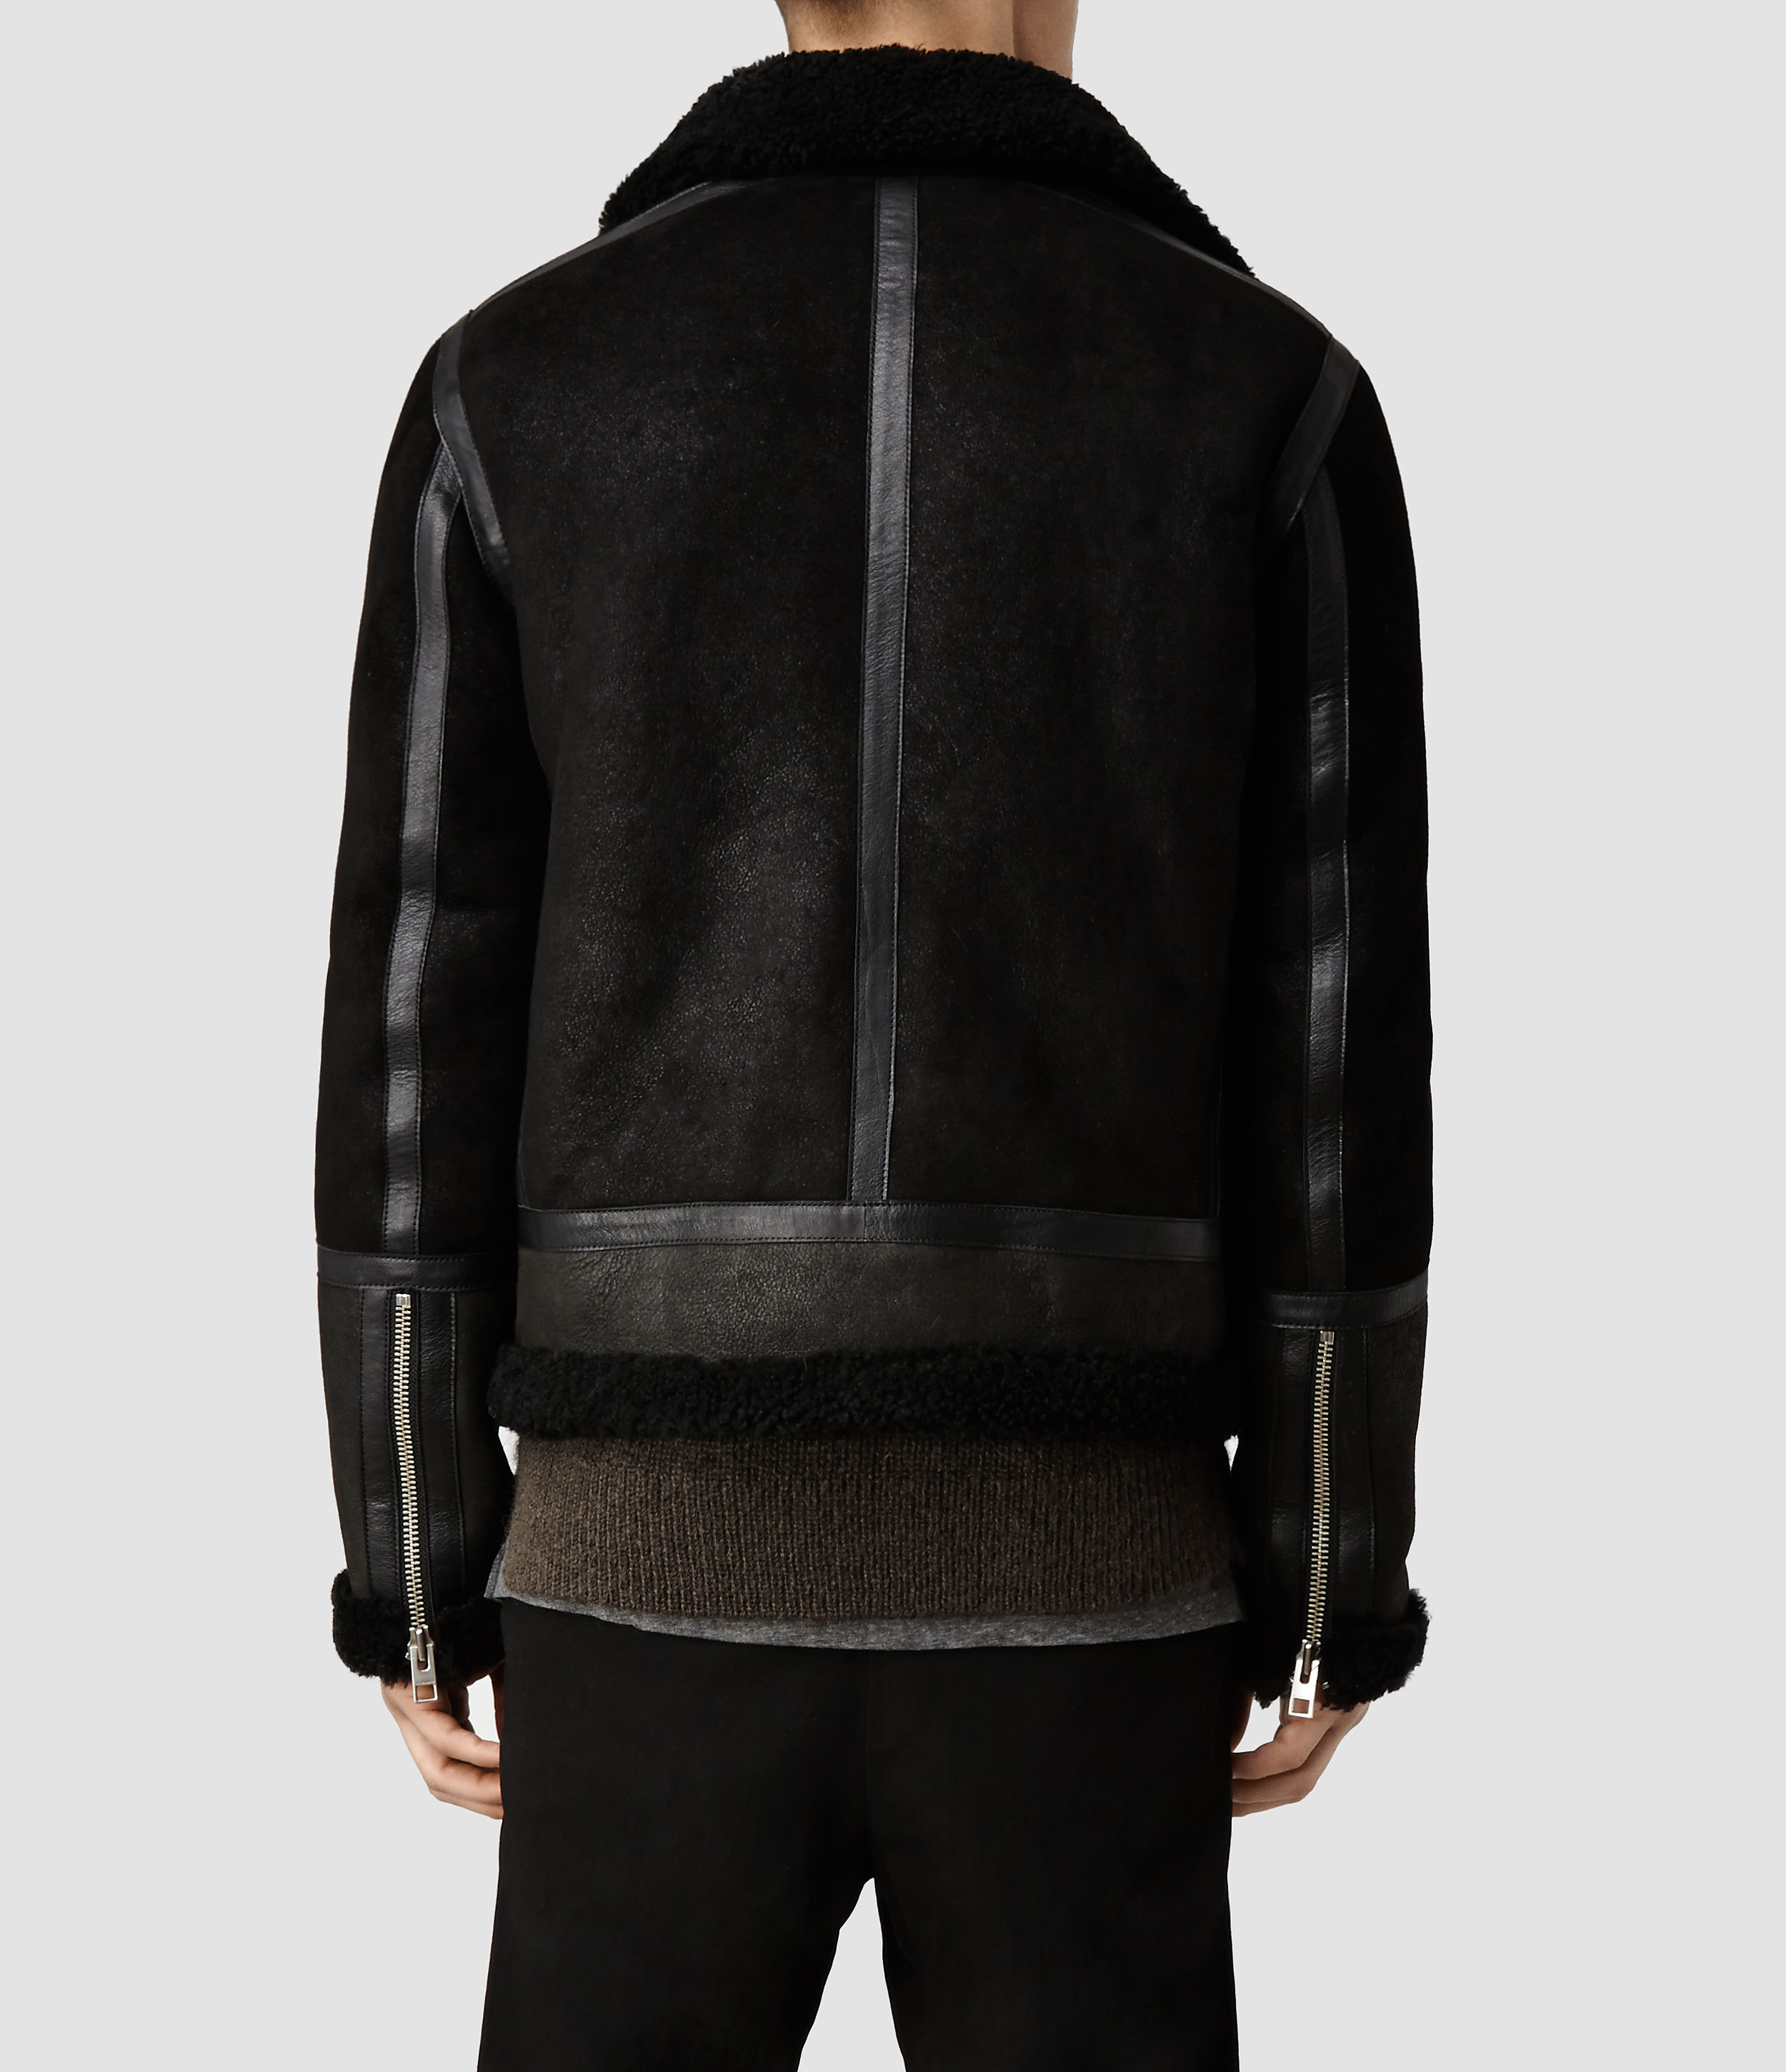 Lyst - Allsaints Union Shearling Leather Jacket in Black for Men